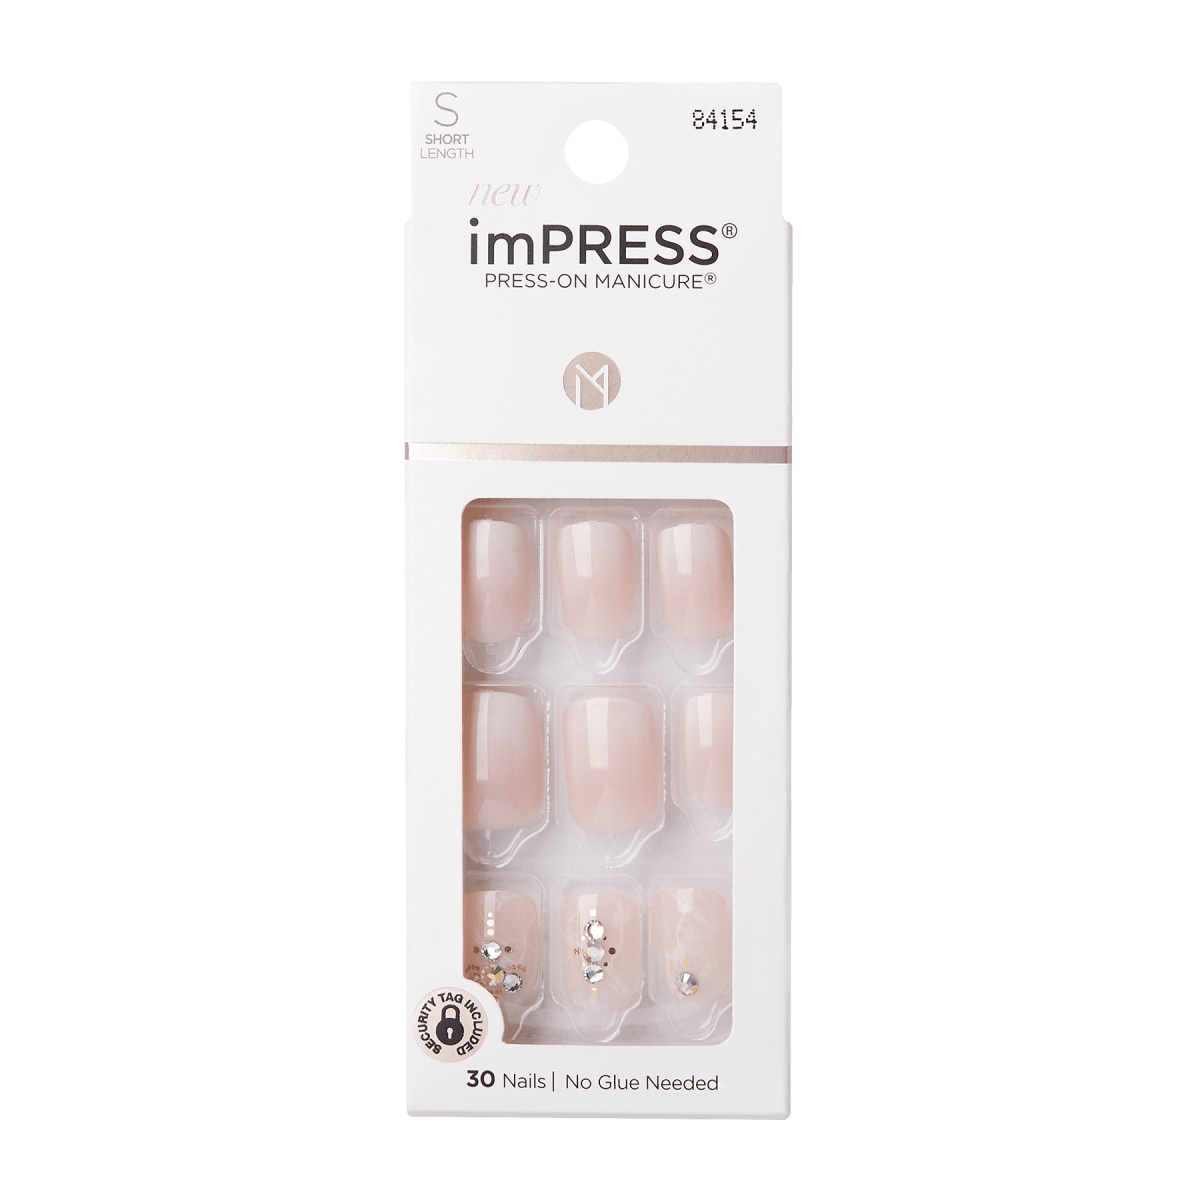 imPRESS Press-On Manicure - Hopefully